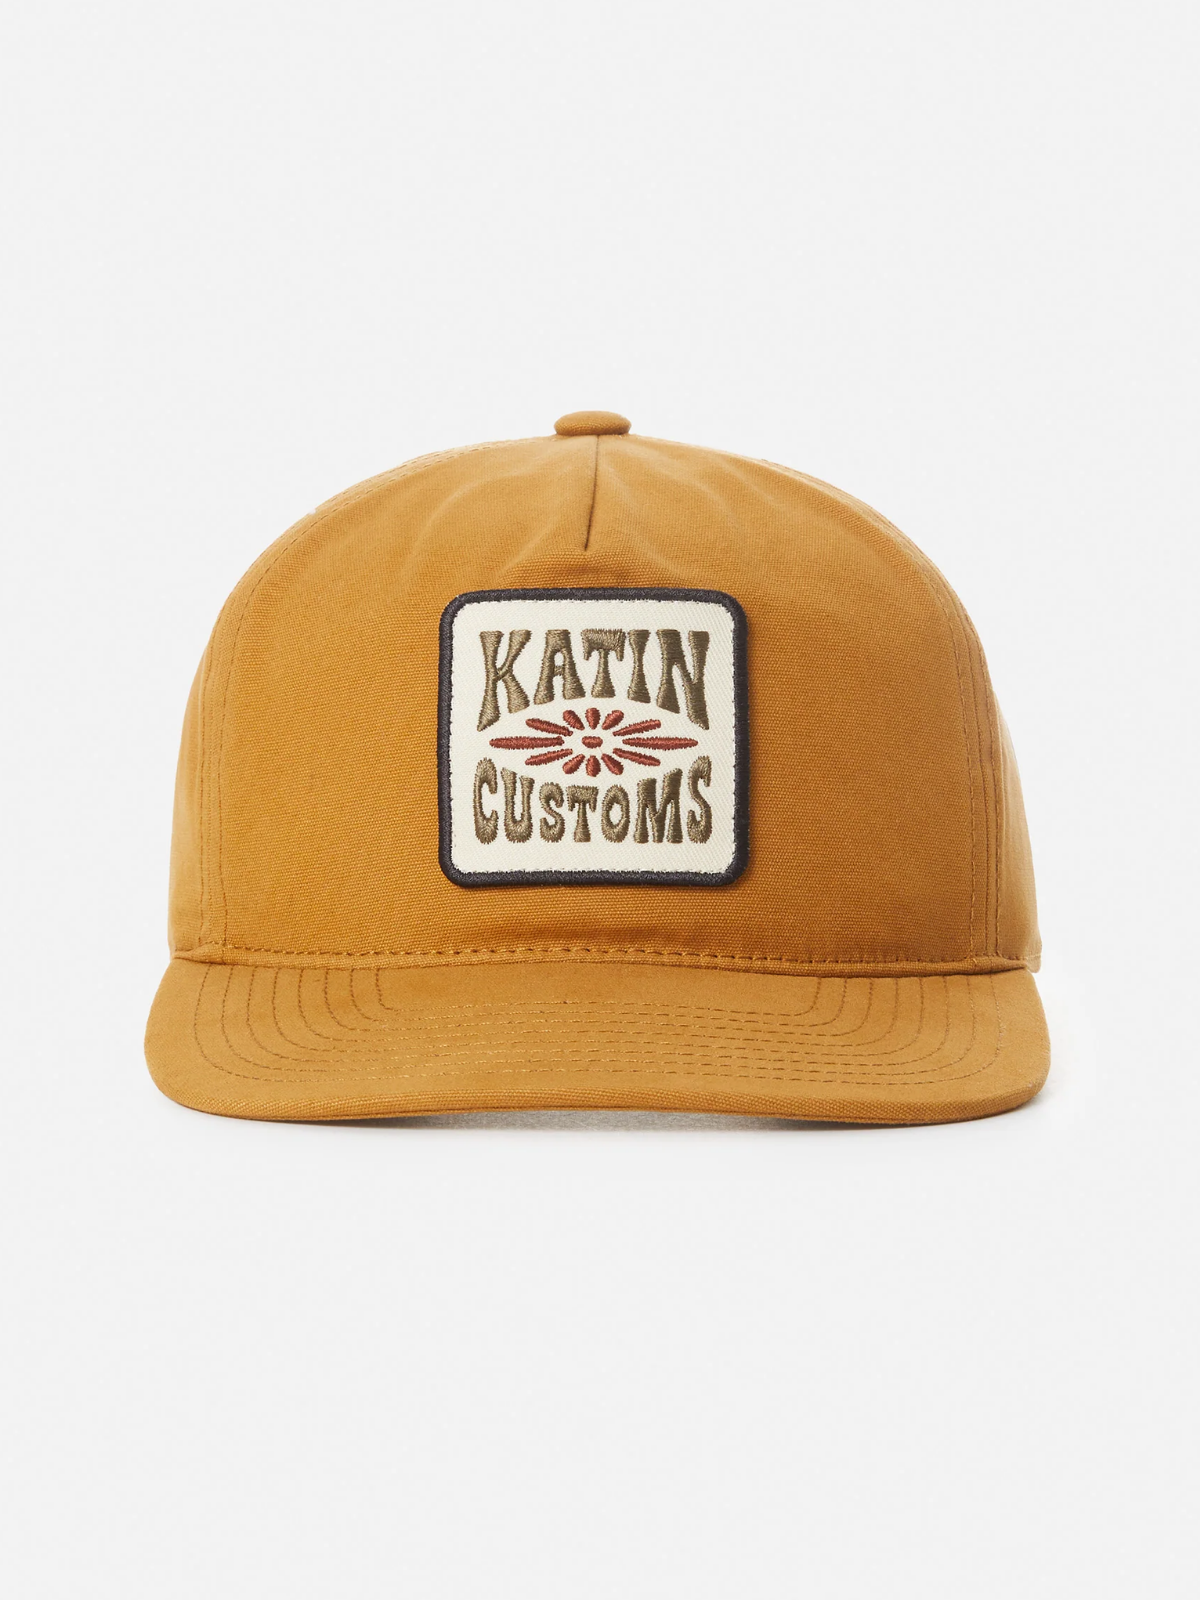 katin concho hat nutmeg gold orange yellow embroidered patch snapback cap kempt athens ga georgia men's clothing store